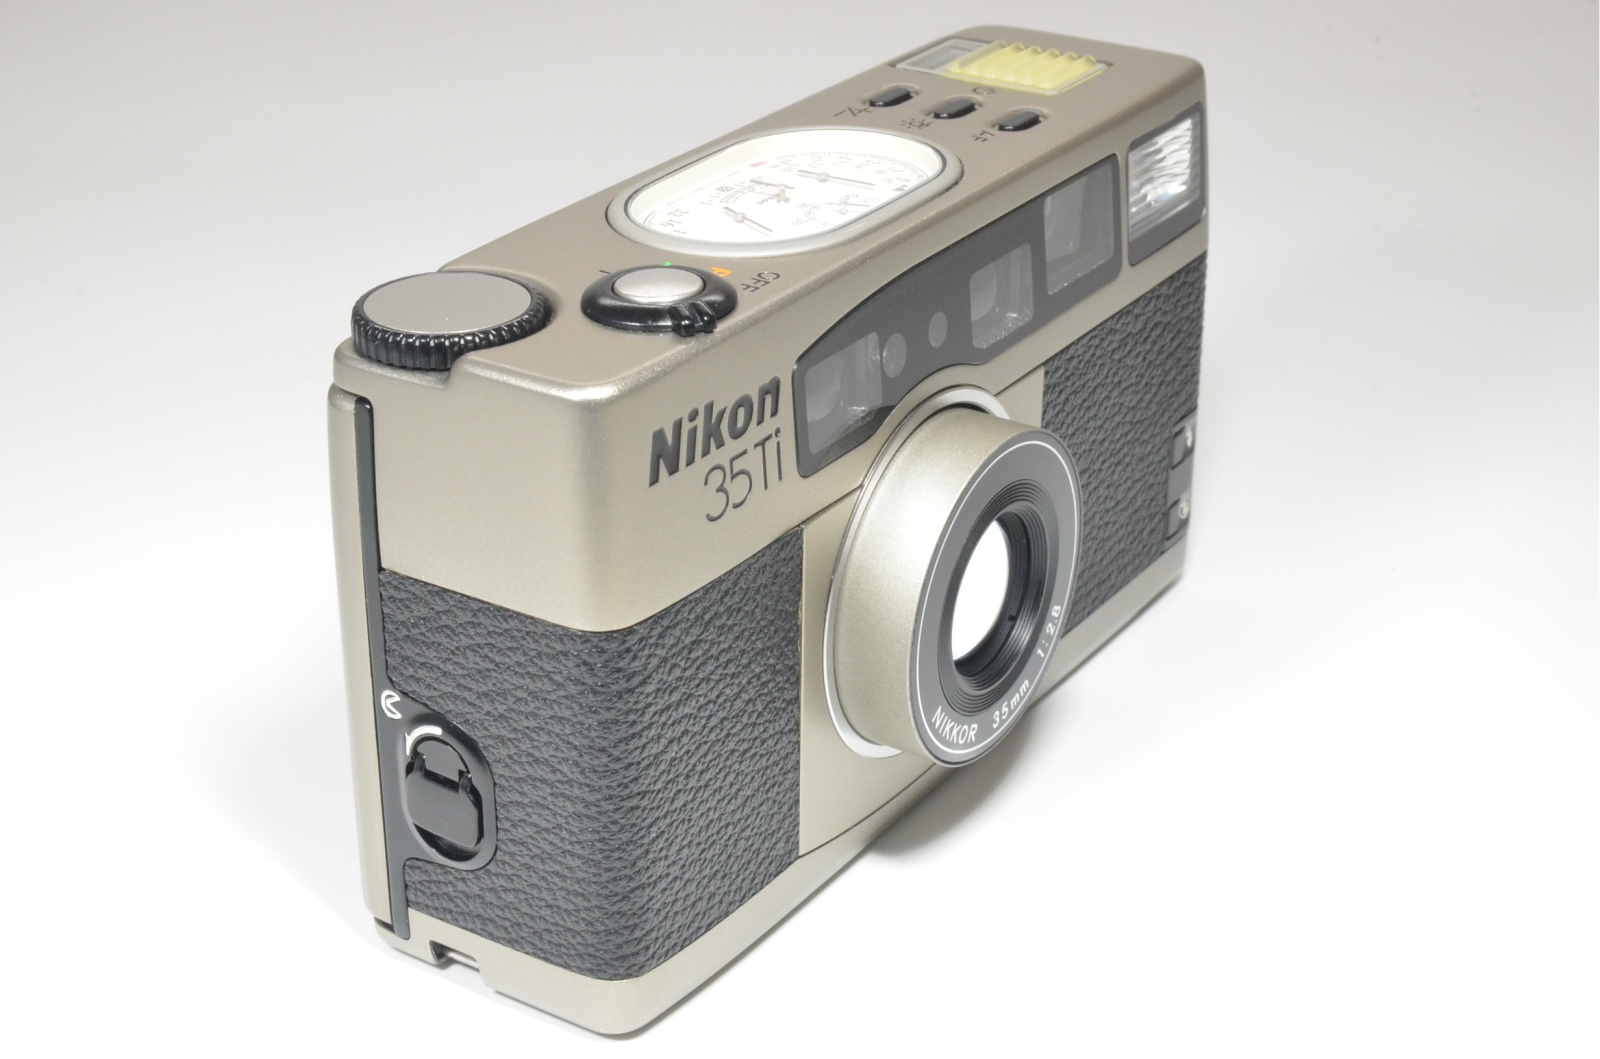 Nikon 35Ti P&S Film Camera Lens 35mm f2.8 from Japan #a1321 